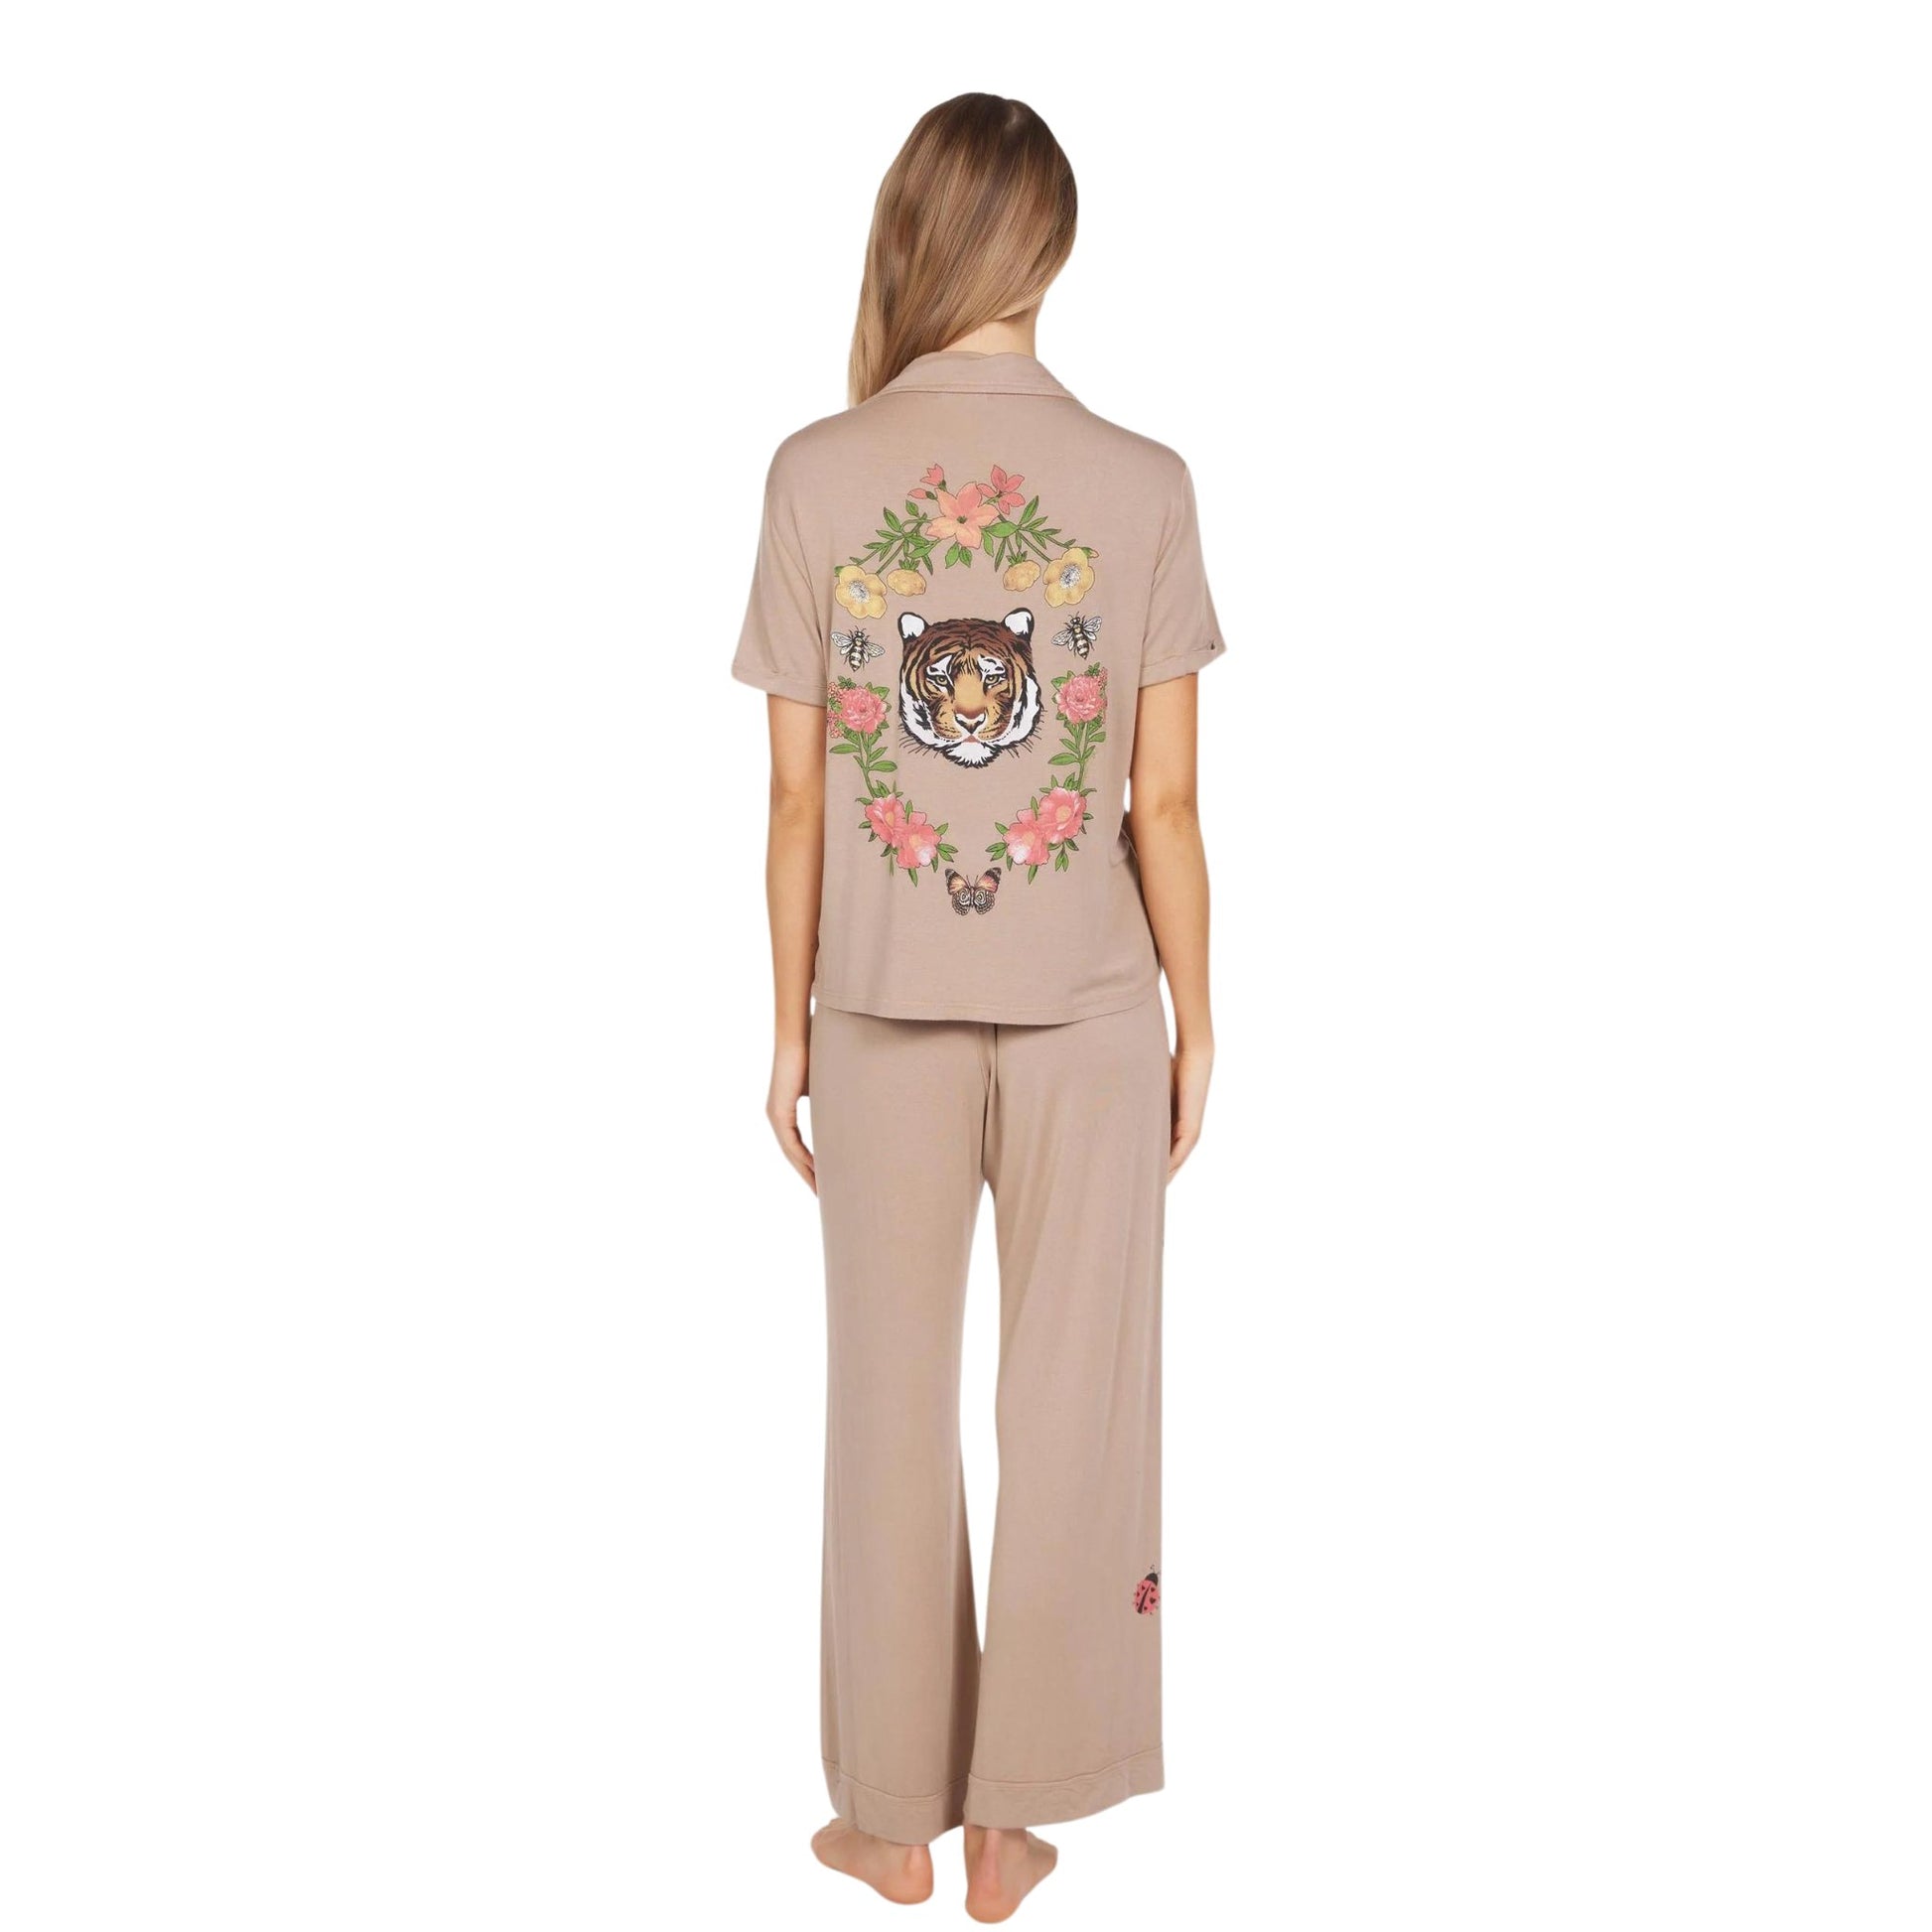 Waverly Garden Tiger Pajamas - Something about Sofia